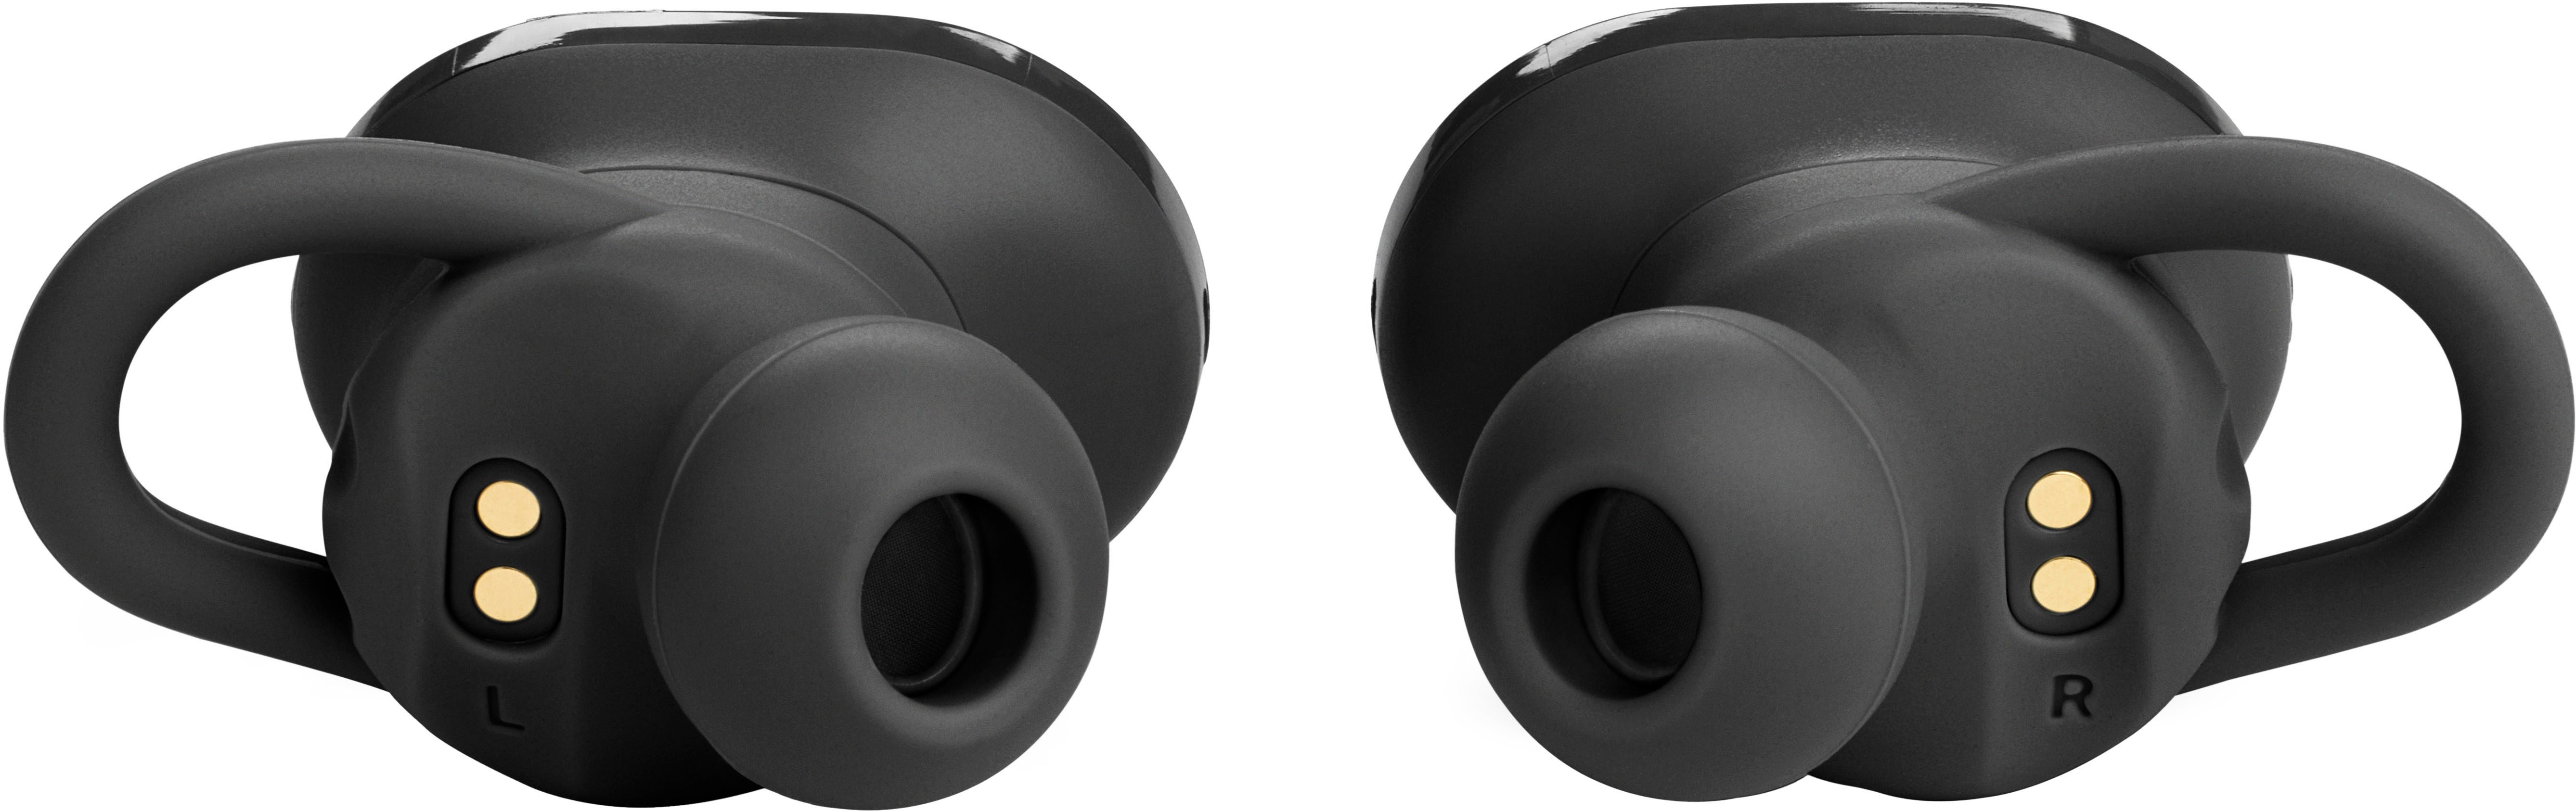 JBL Endurance Race Waterproof True Black Earbud - Headphones Wireless Buy JBLENDURACEBLKAM Best Sport